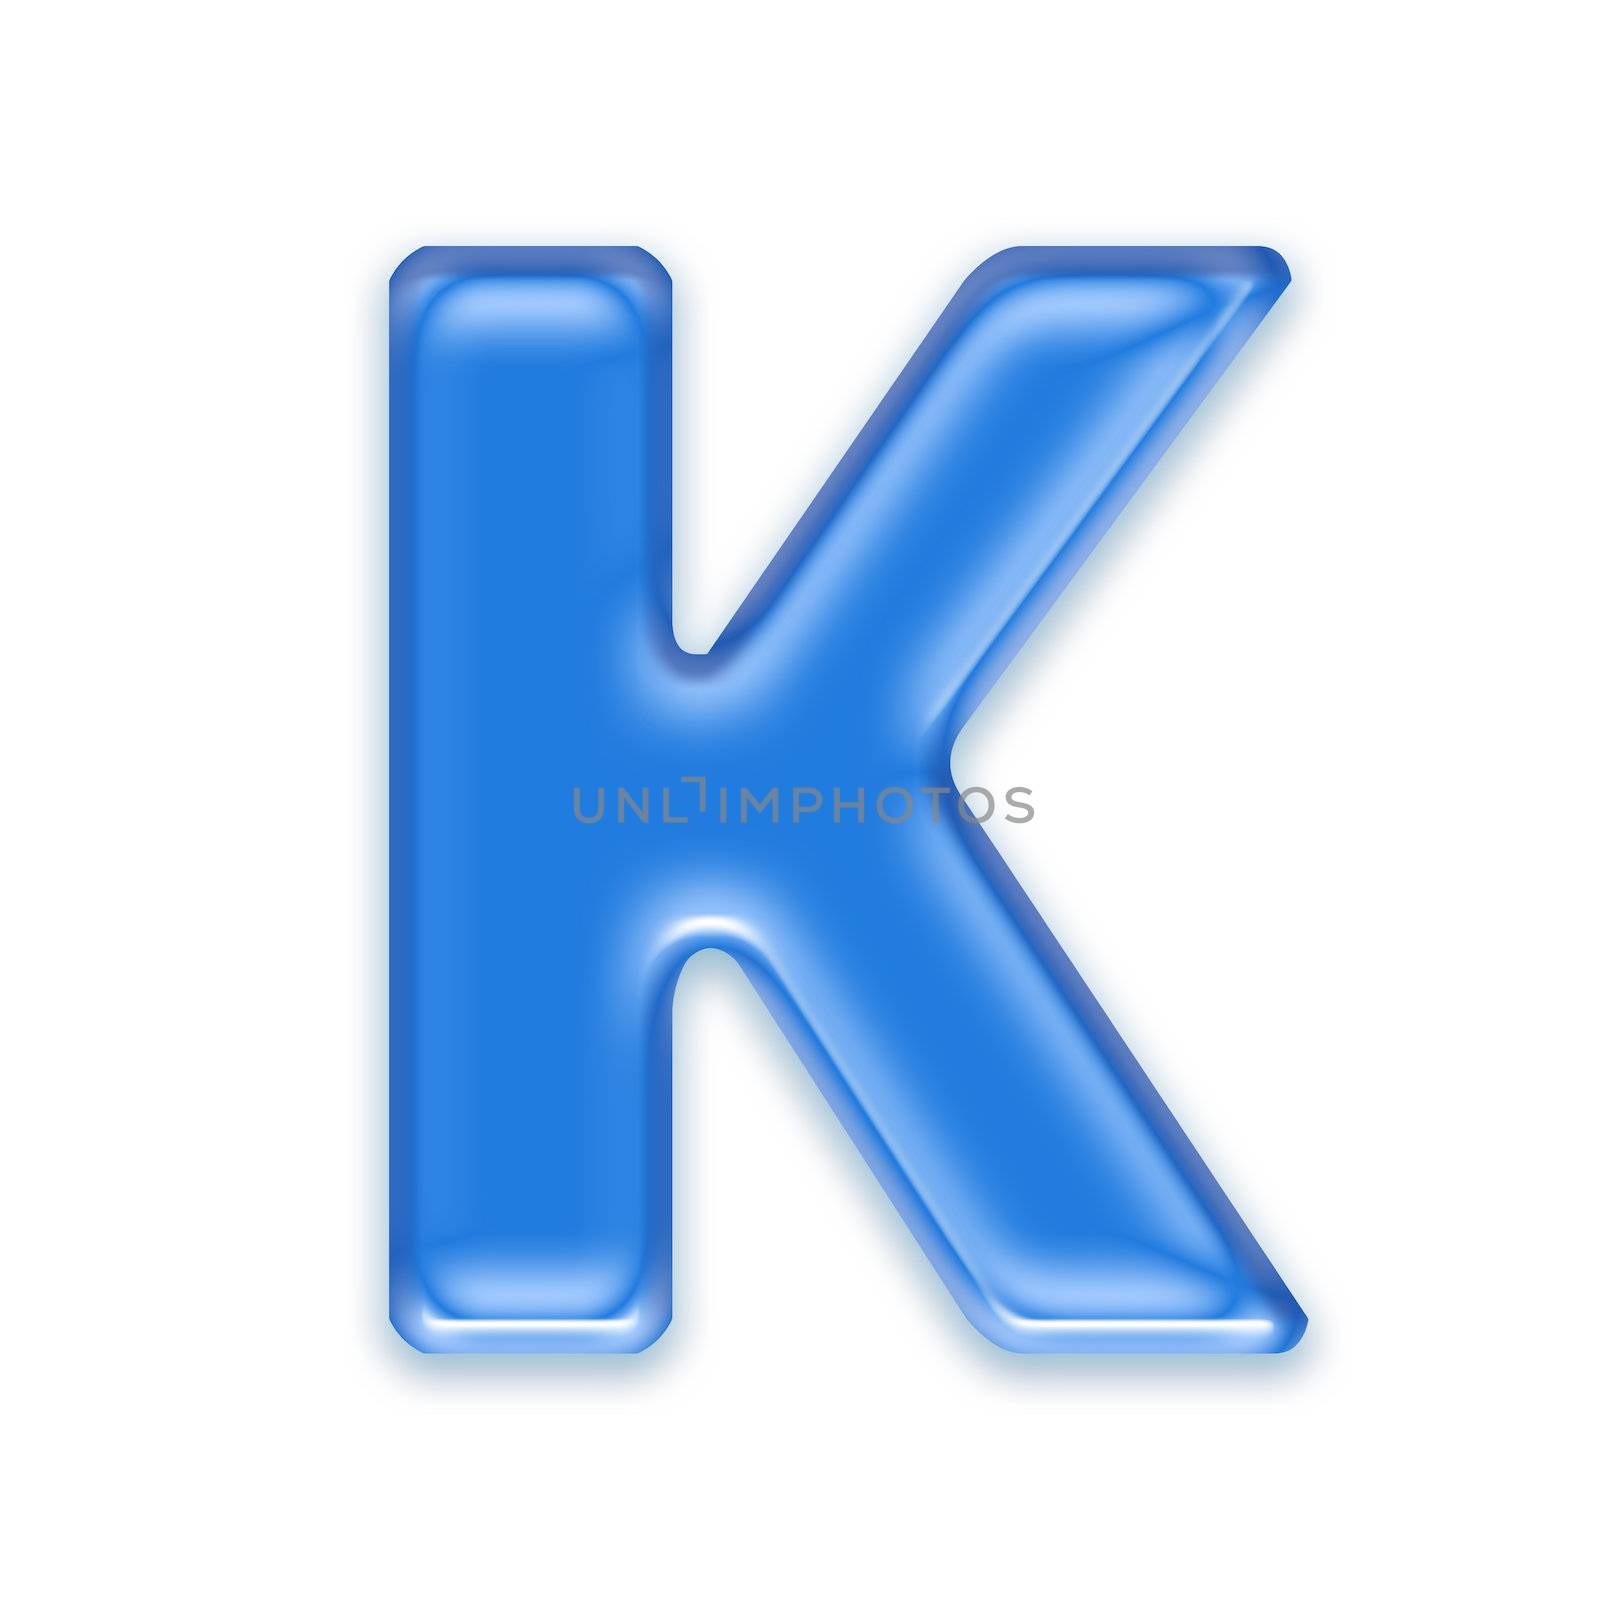 Aqua letter isolated on white background  - K by chrisroll